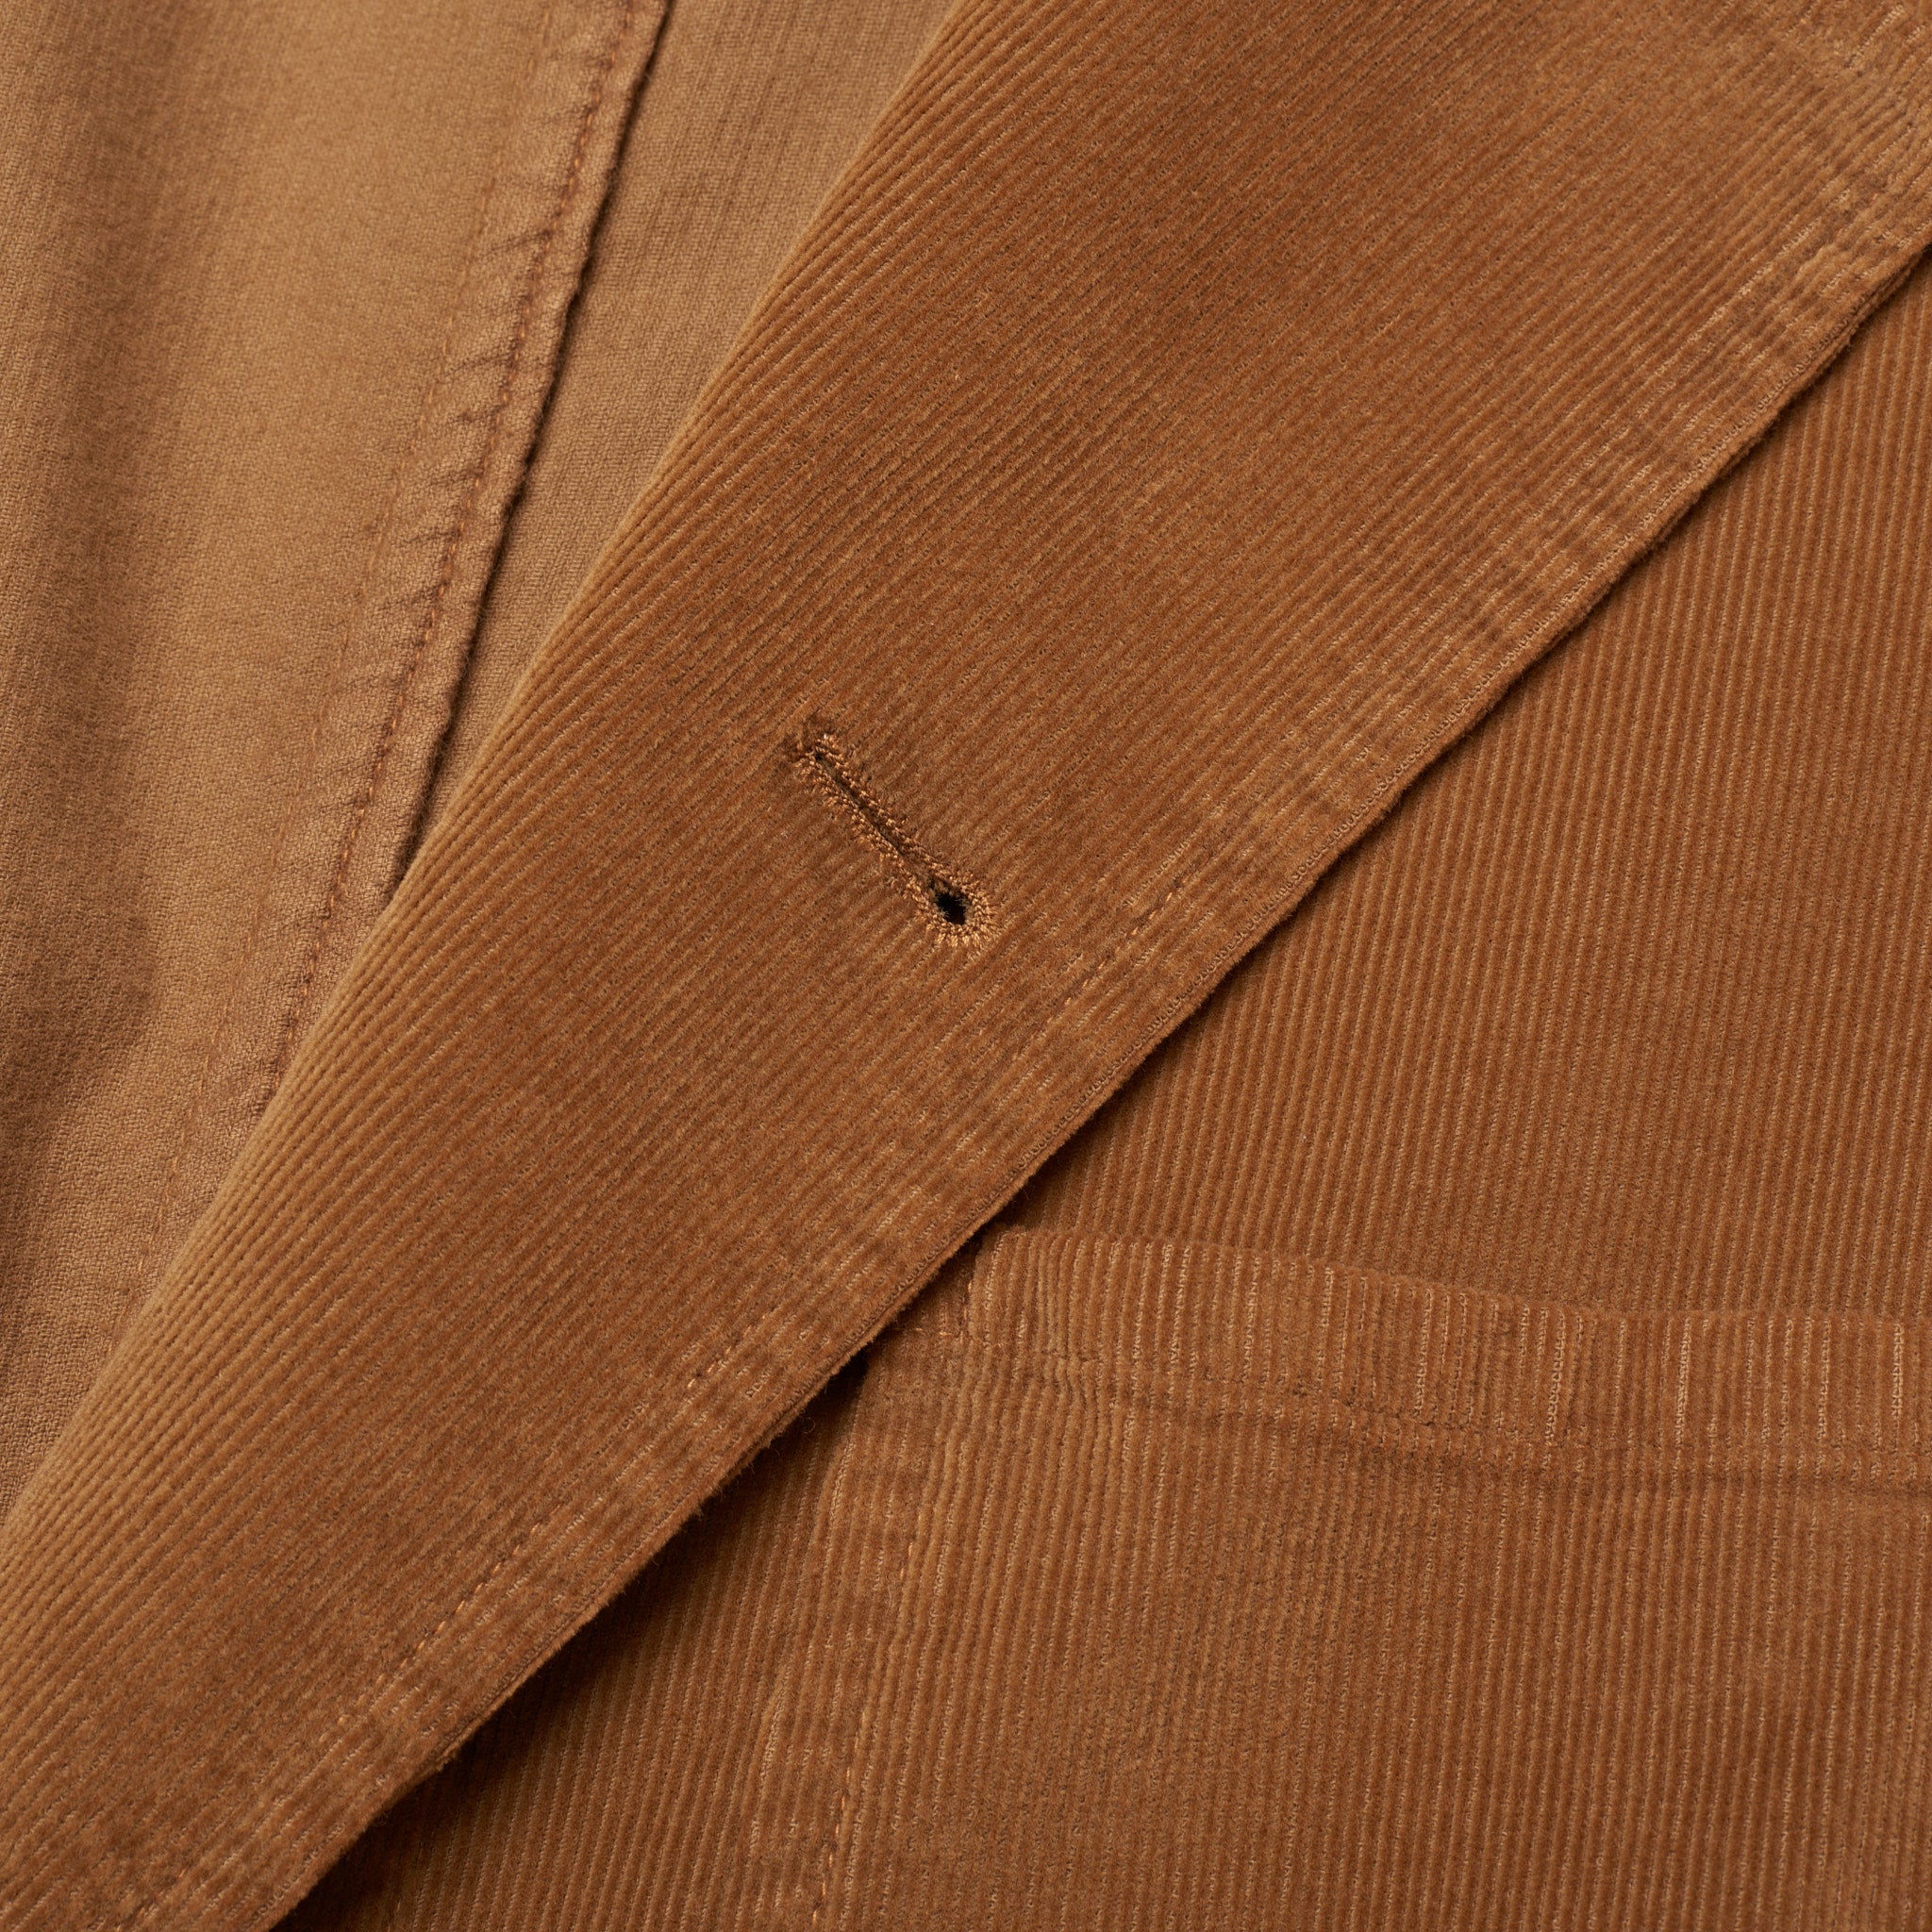 BOGLIOLI Milano "67" Tan Corduroy Cotton 4 Button Unlined Jacket NEW